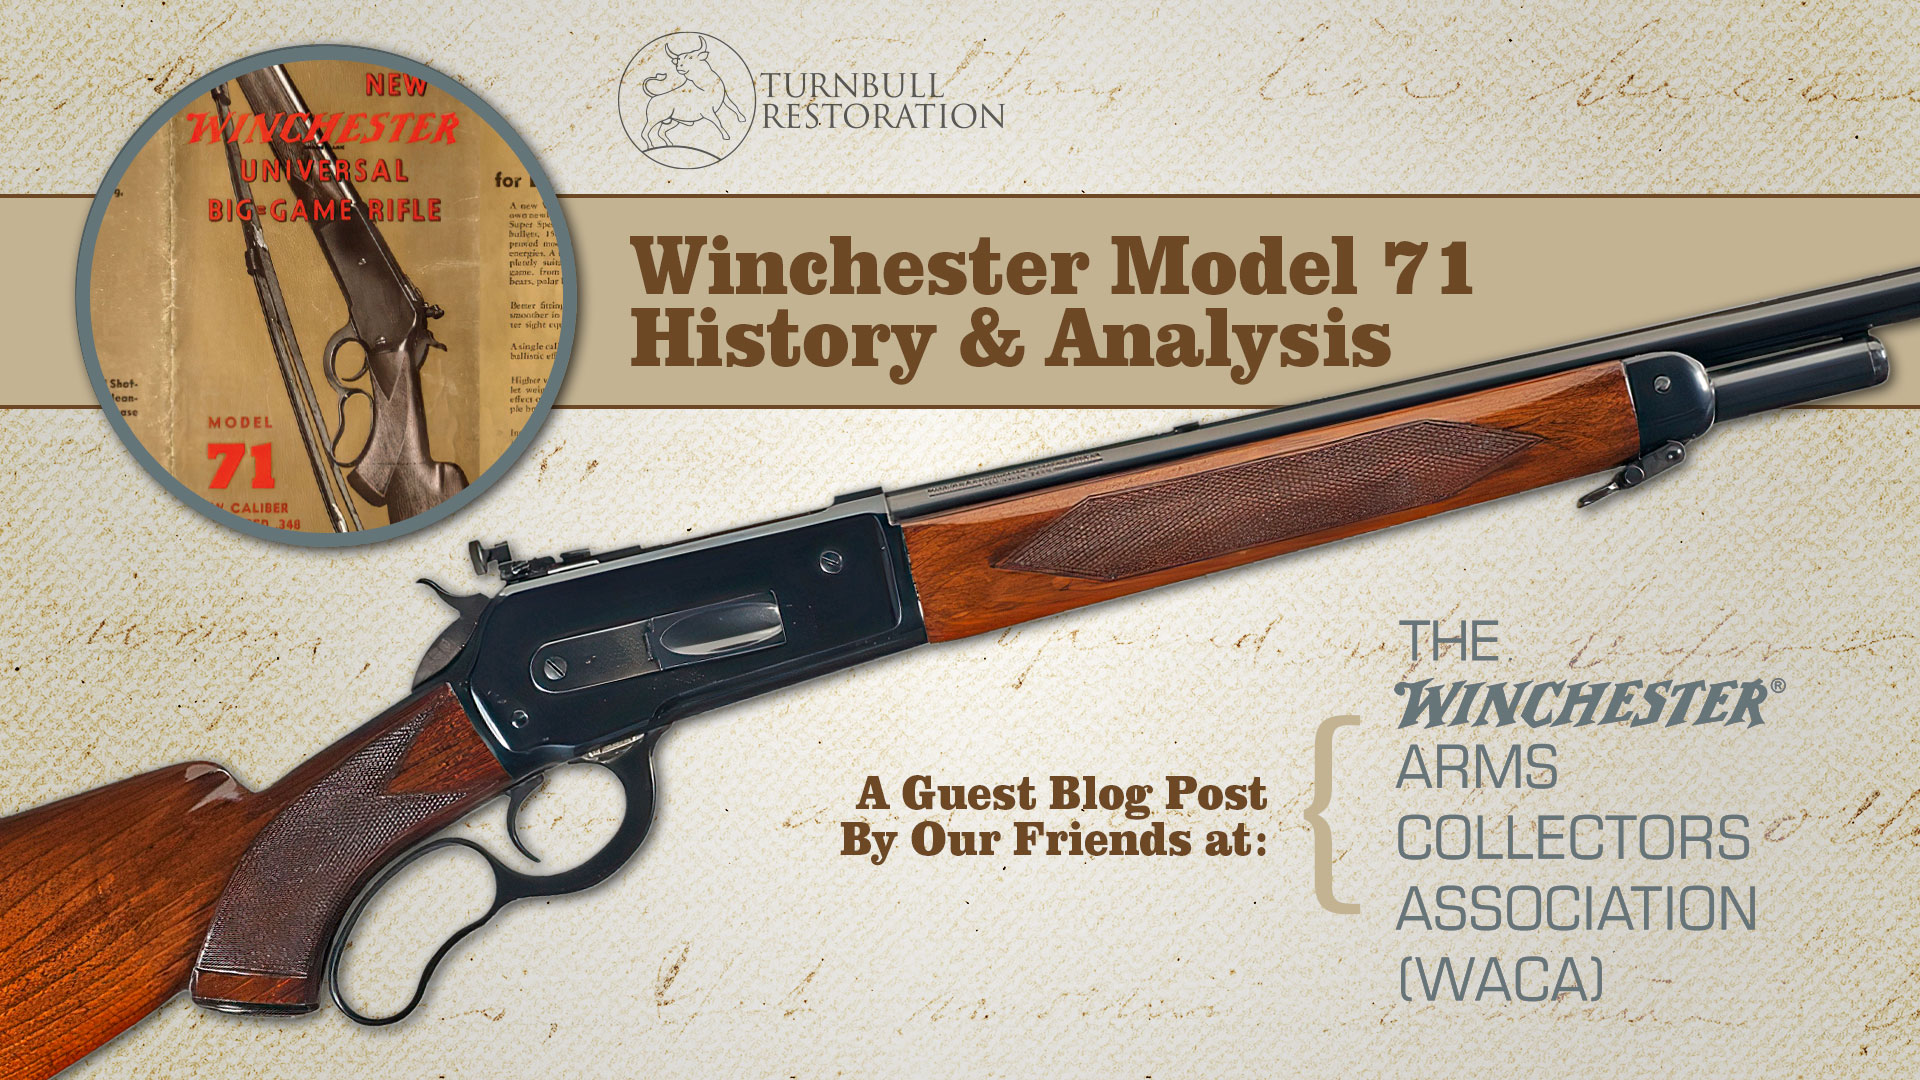 Winchester Model 71 - Turnbull Restoration